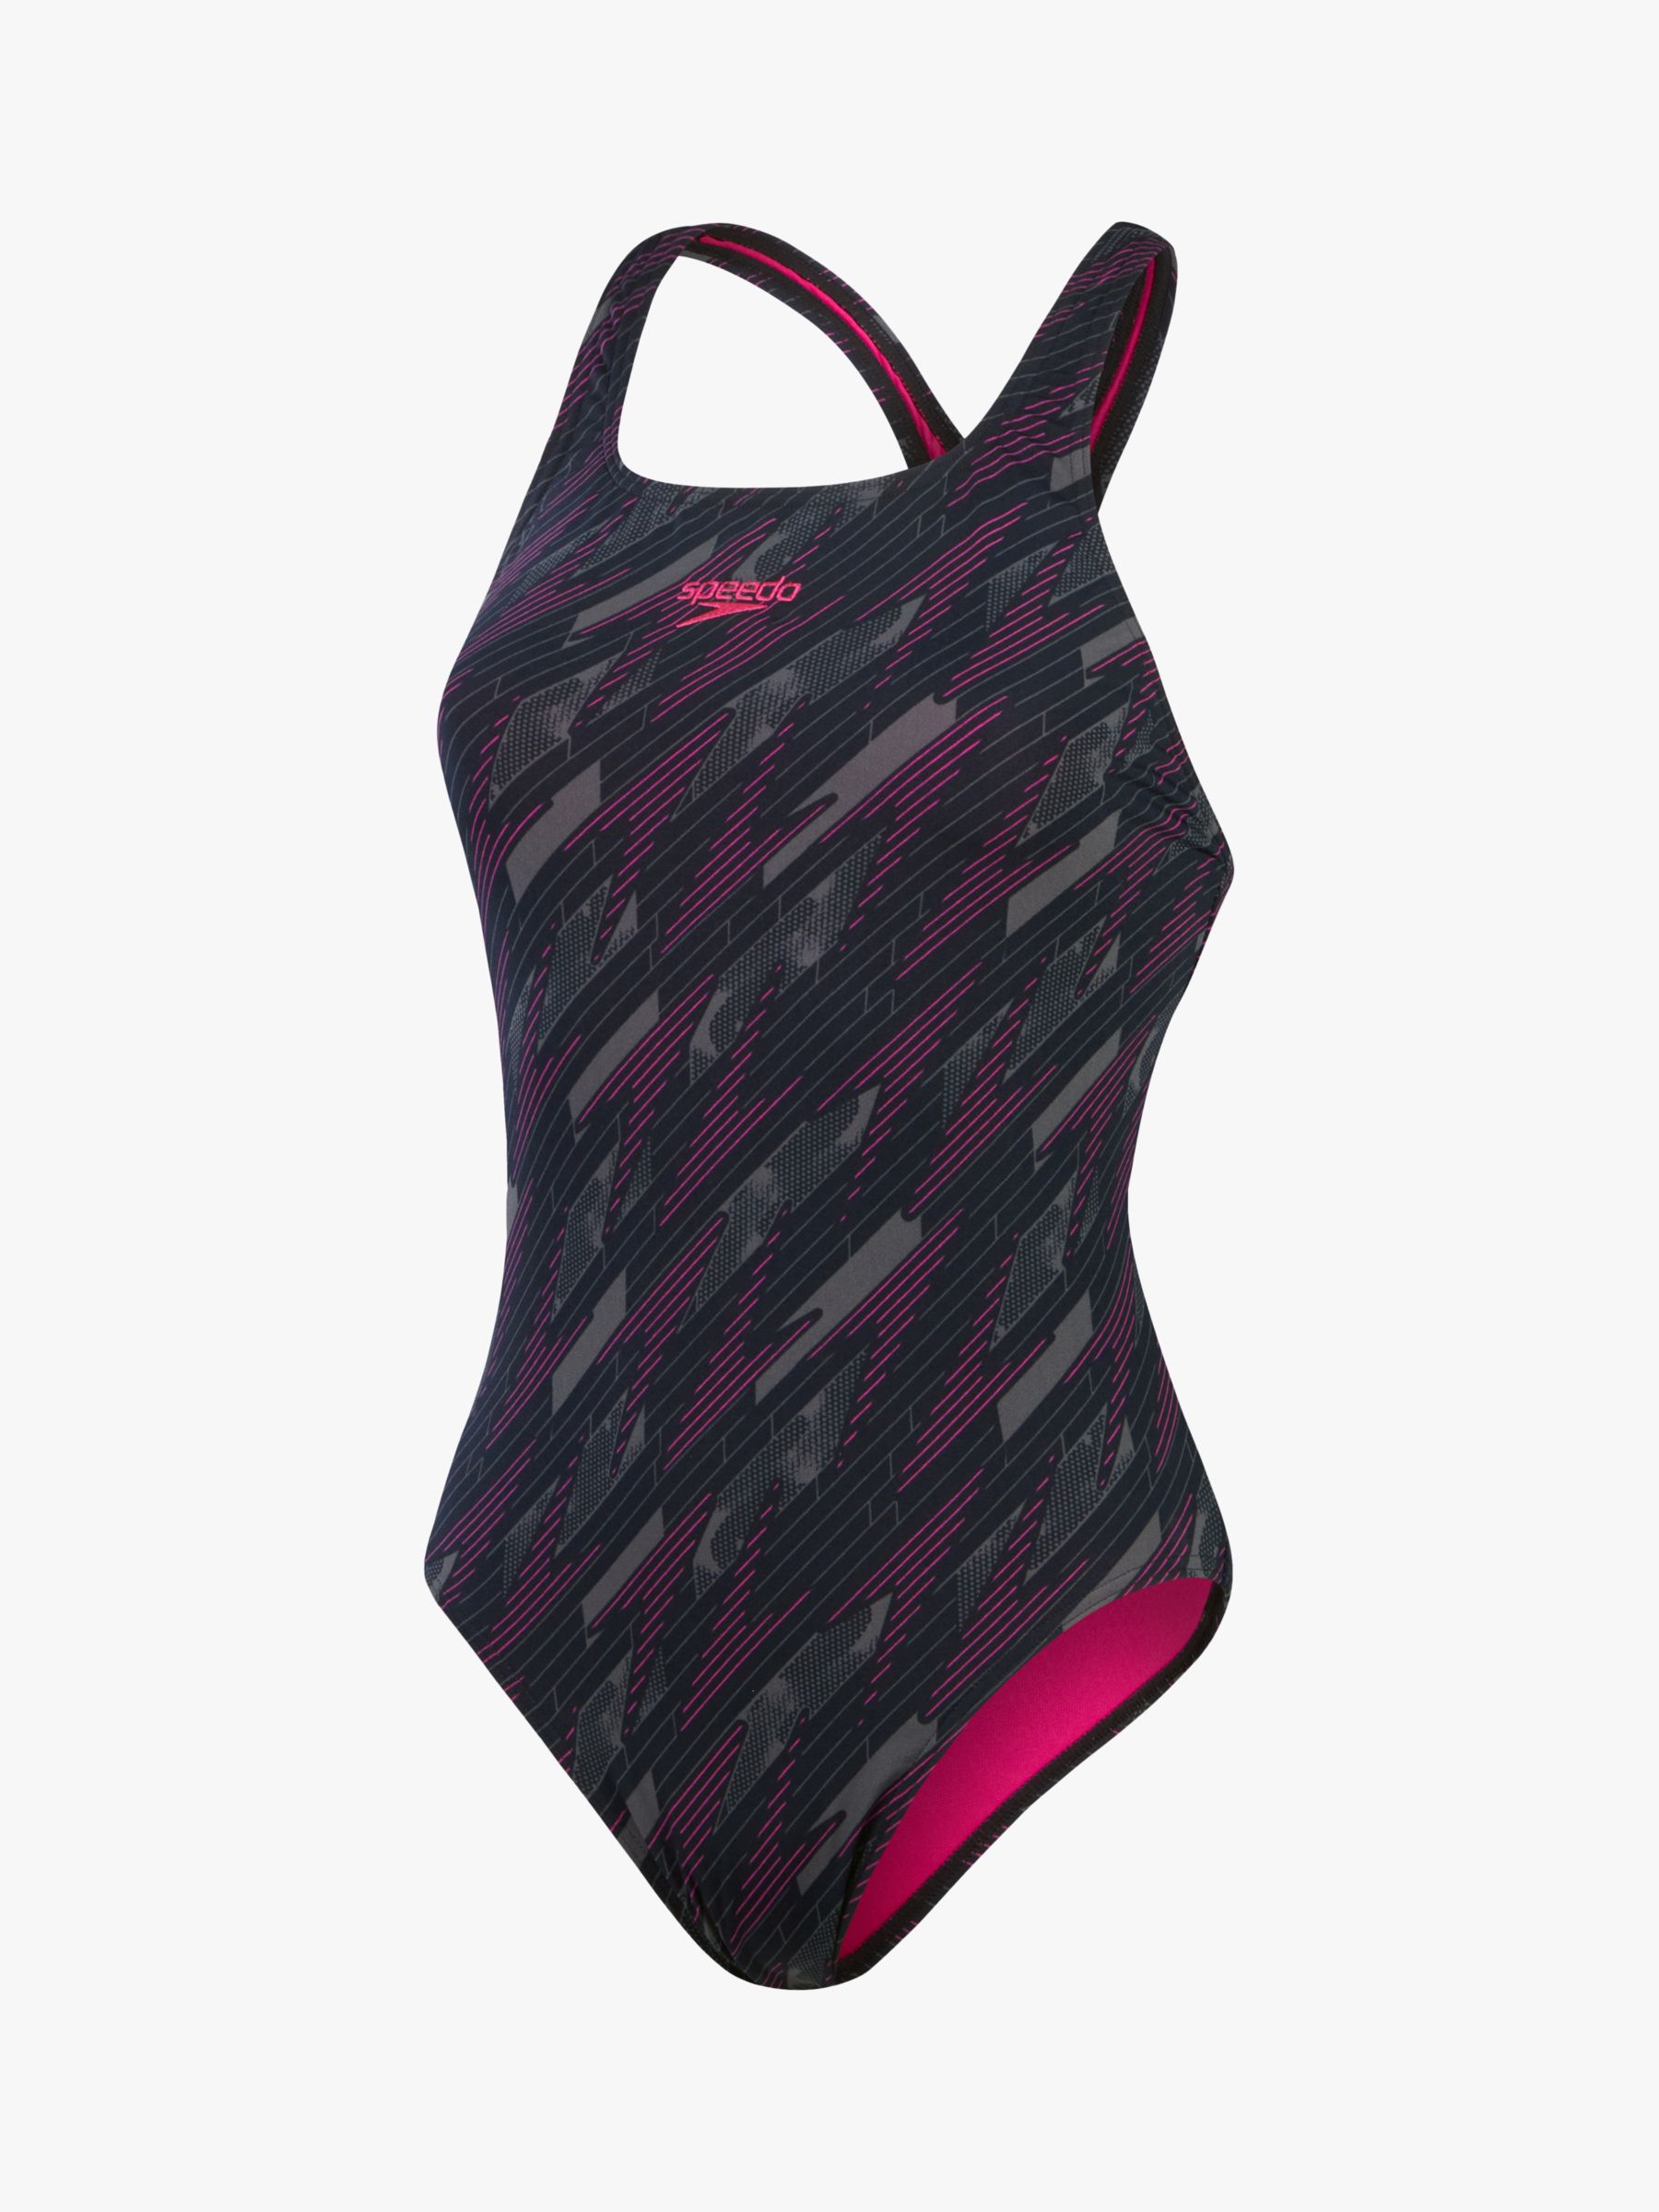 Speedo Hyperboom Medalist Swimsuit, Black/Pink, 40